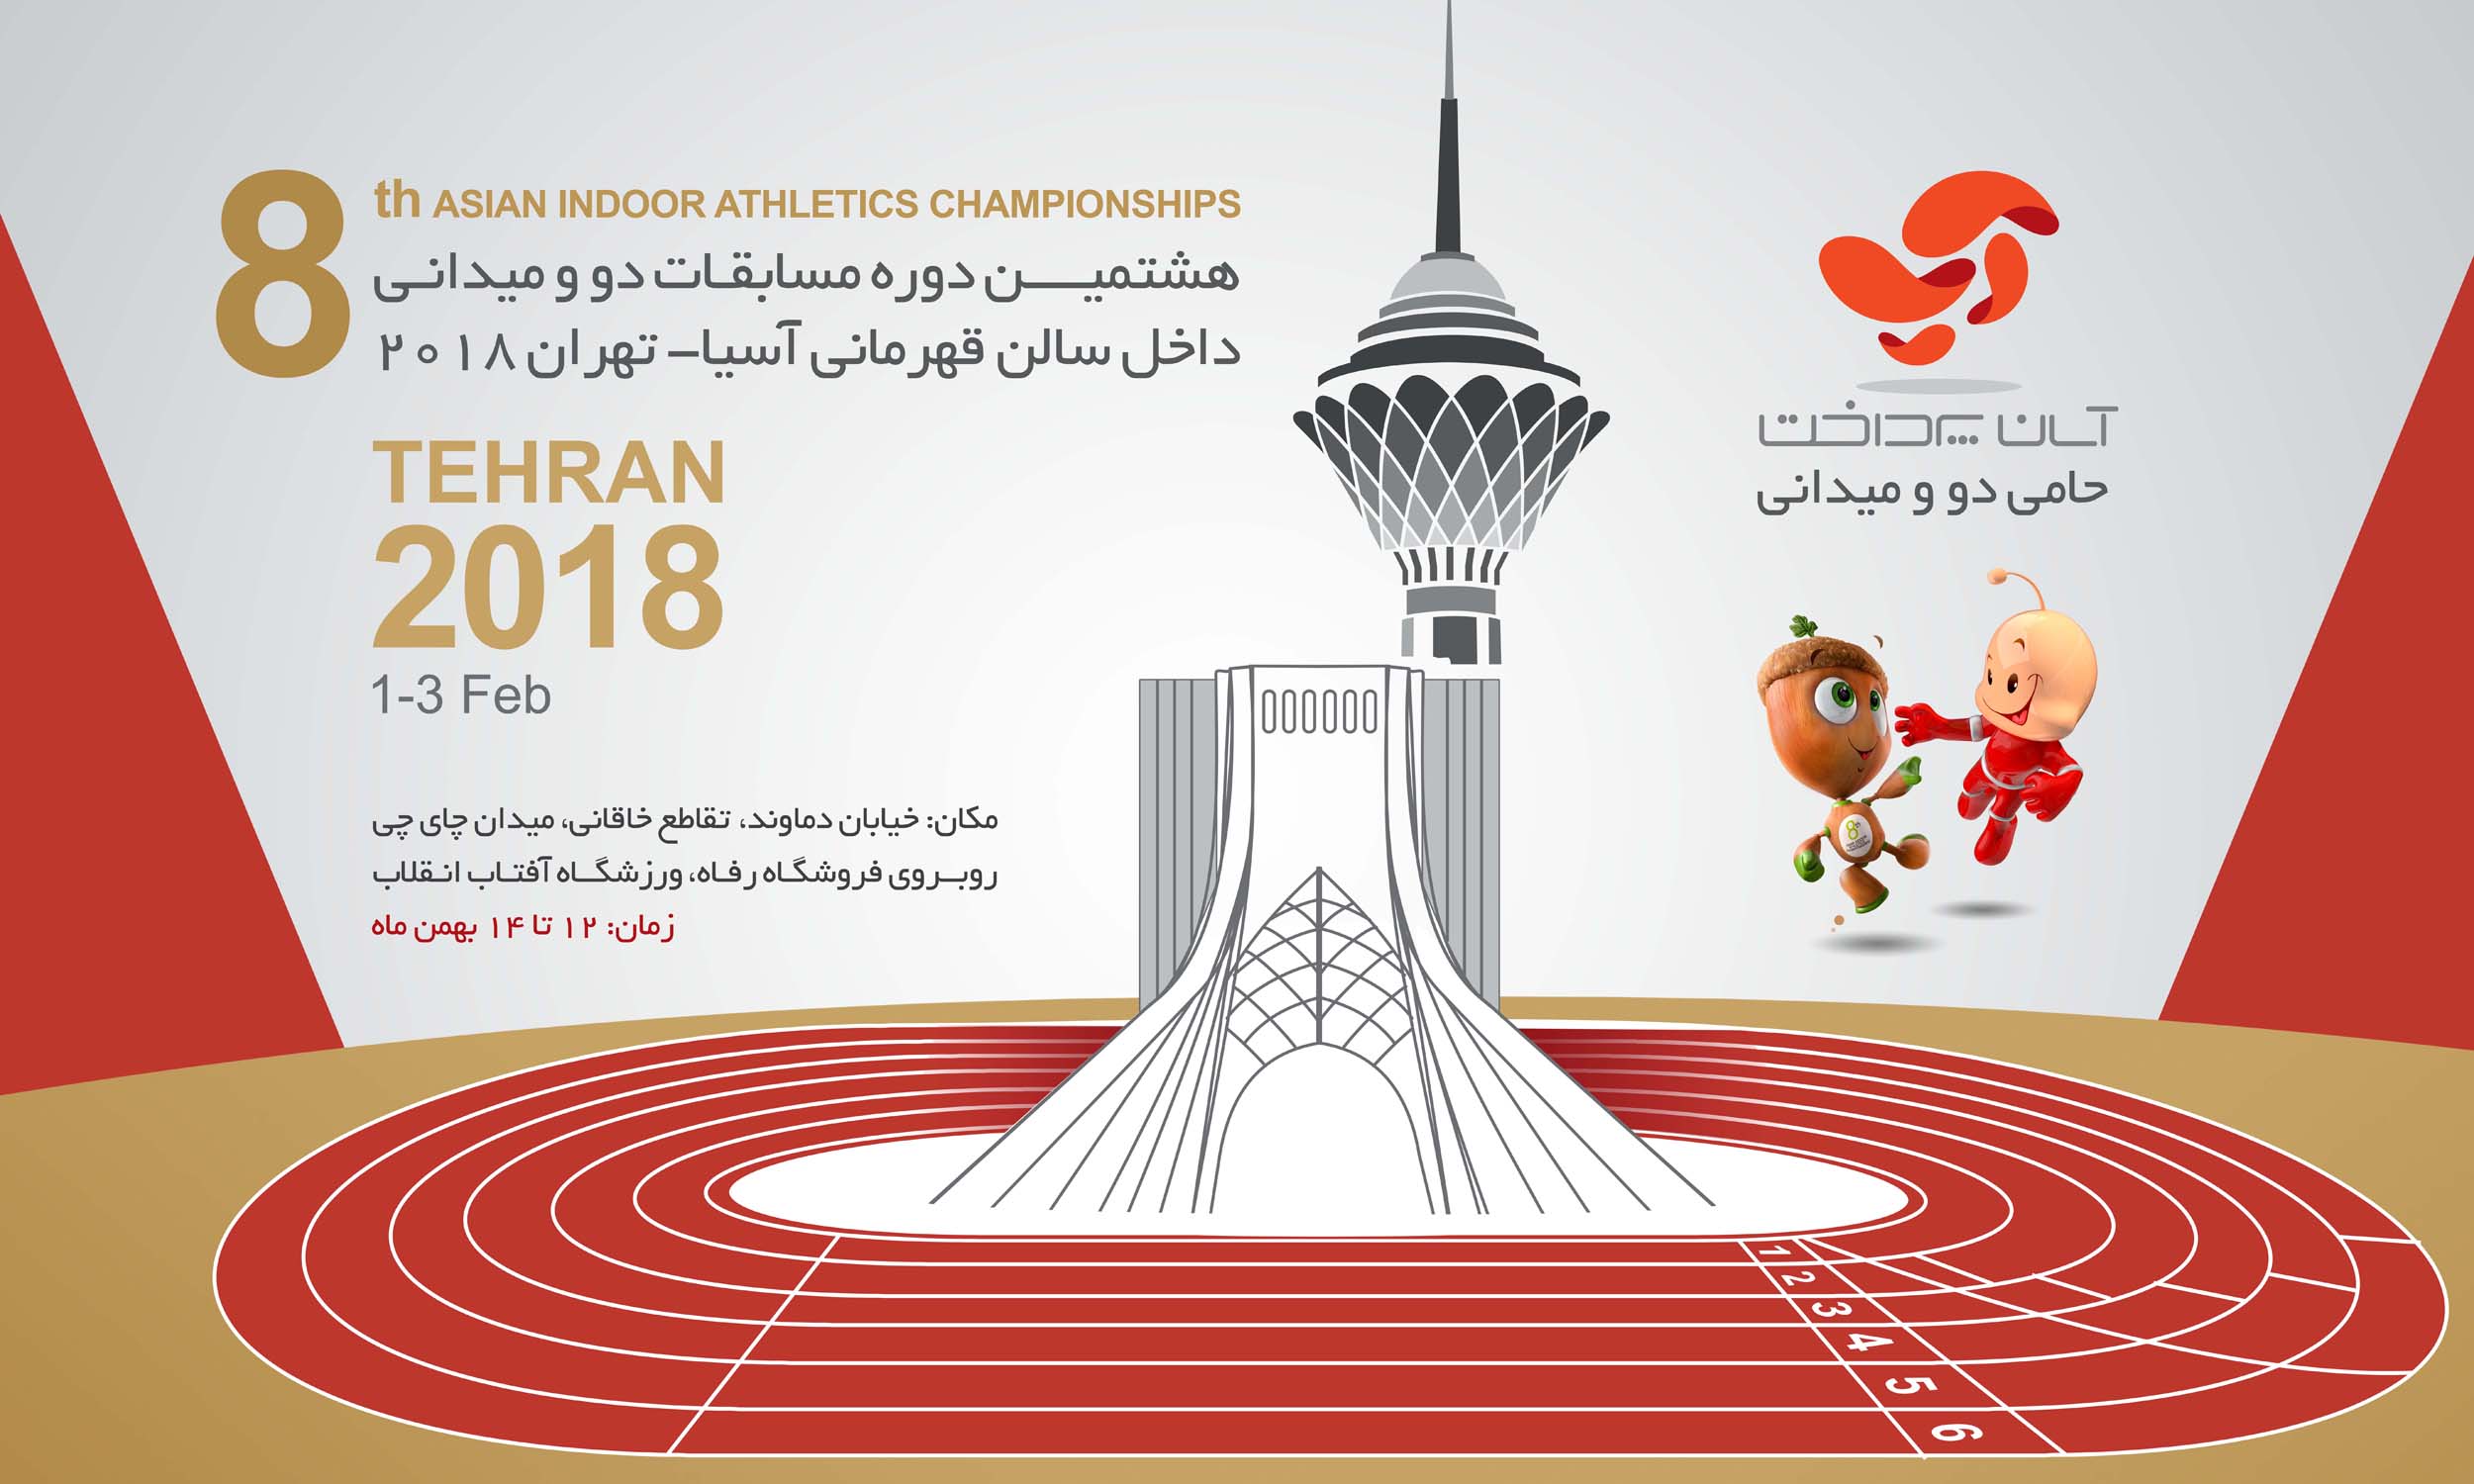 8th Asian Indoor Athletics Championships kicks off in Tehran